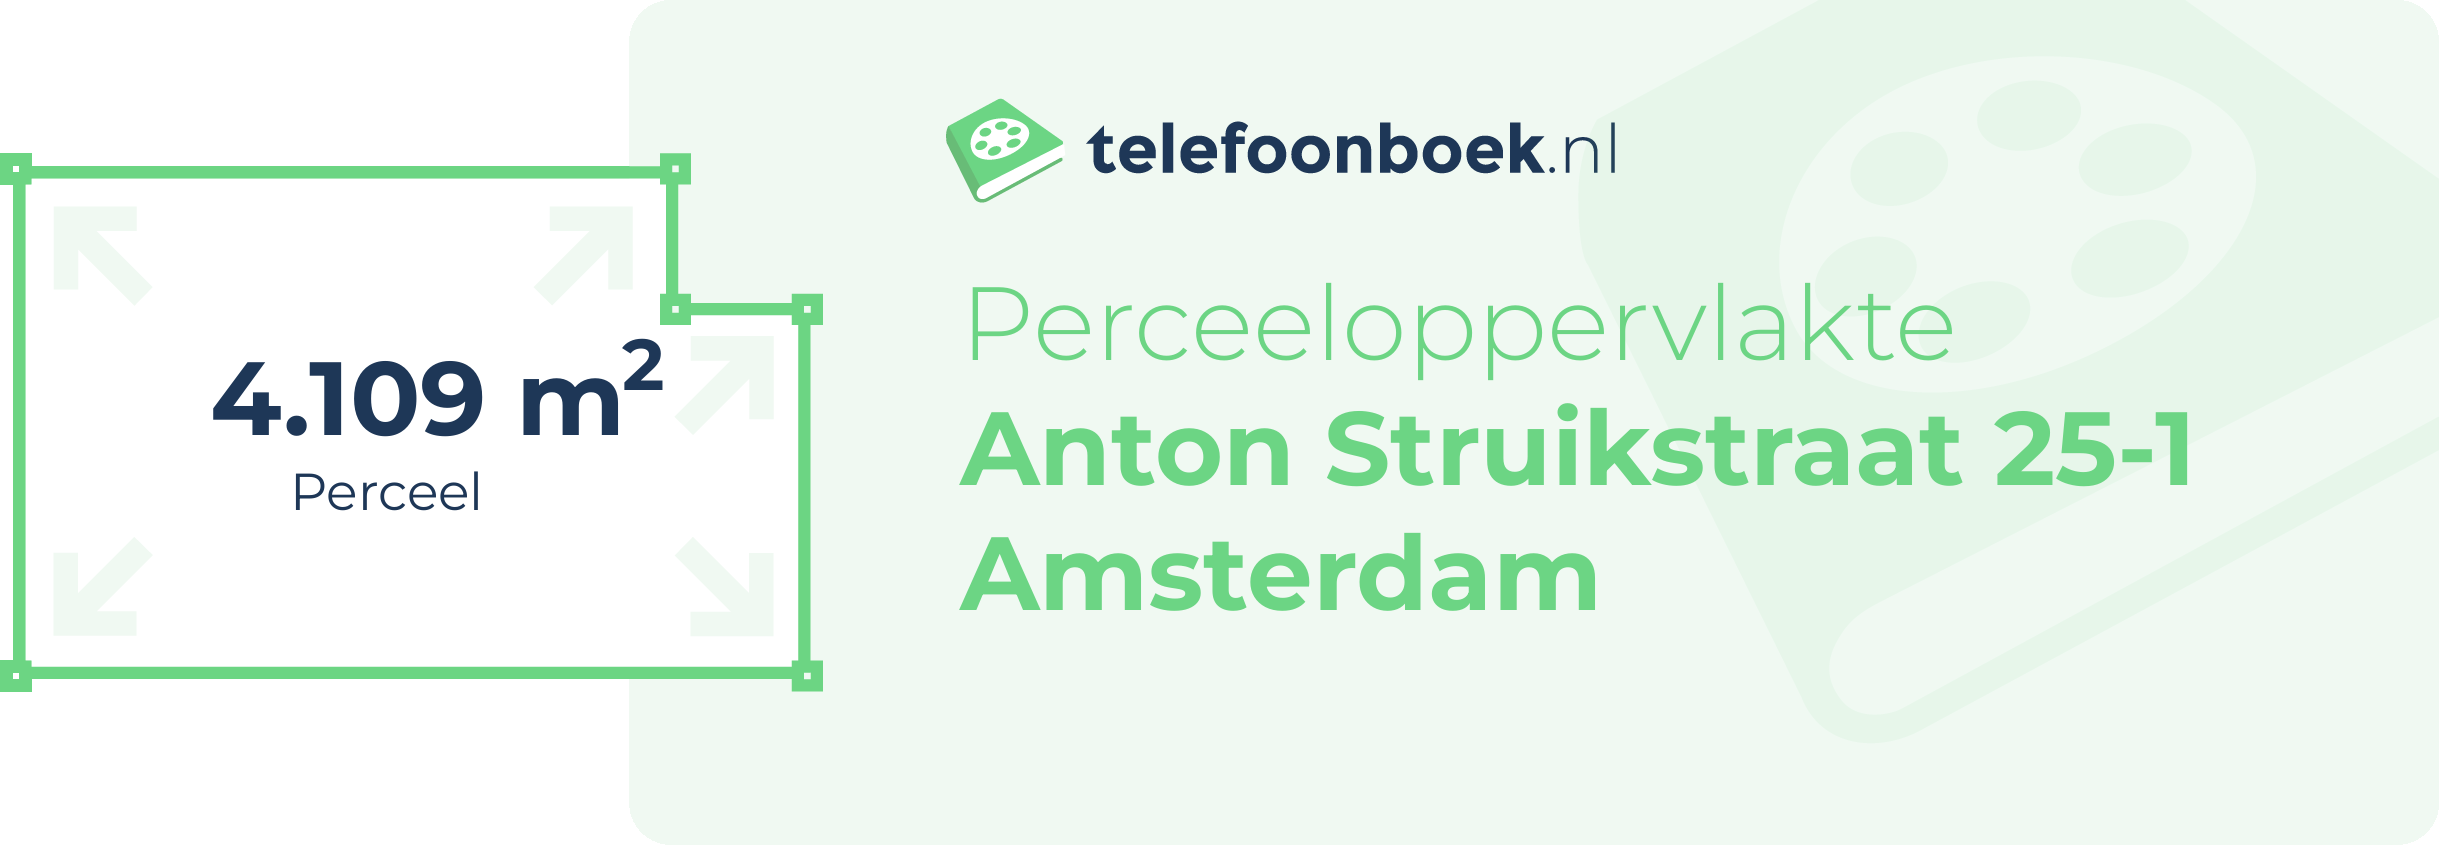 Perceeloppervlakte Anton Struikstraat 25-1 Amsterdam